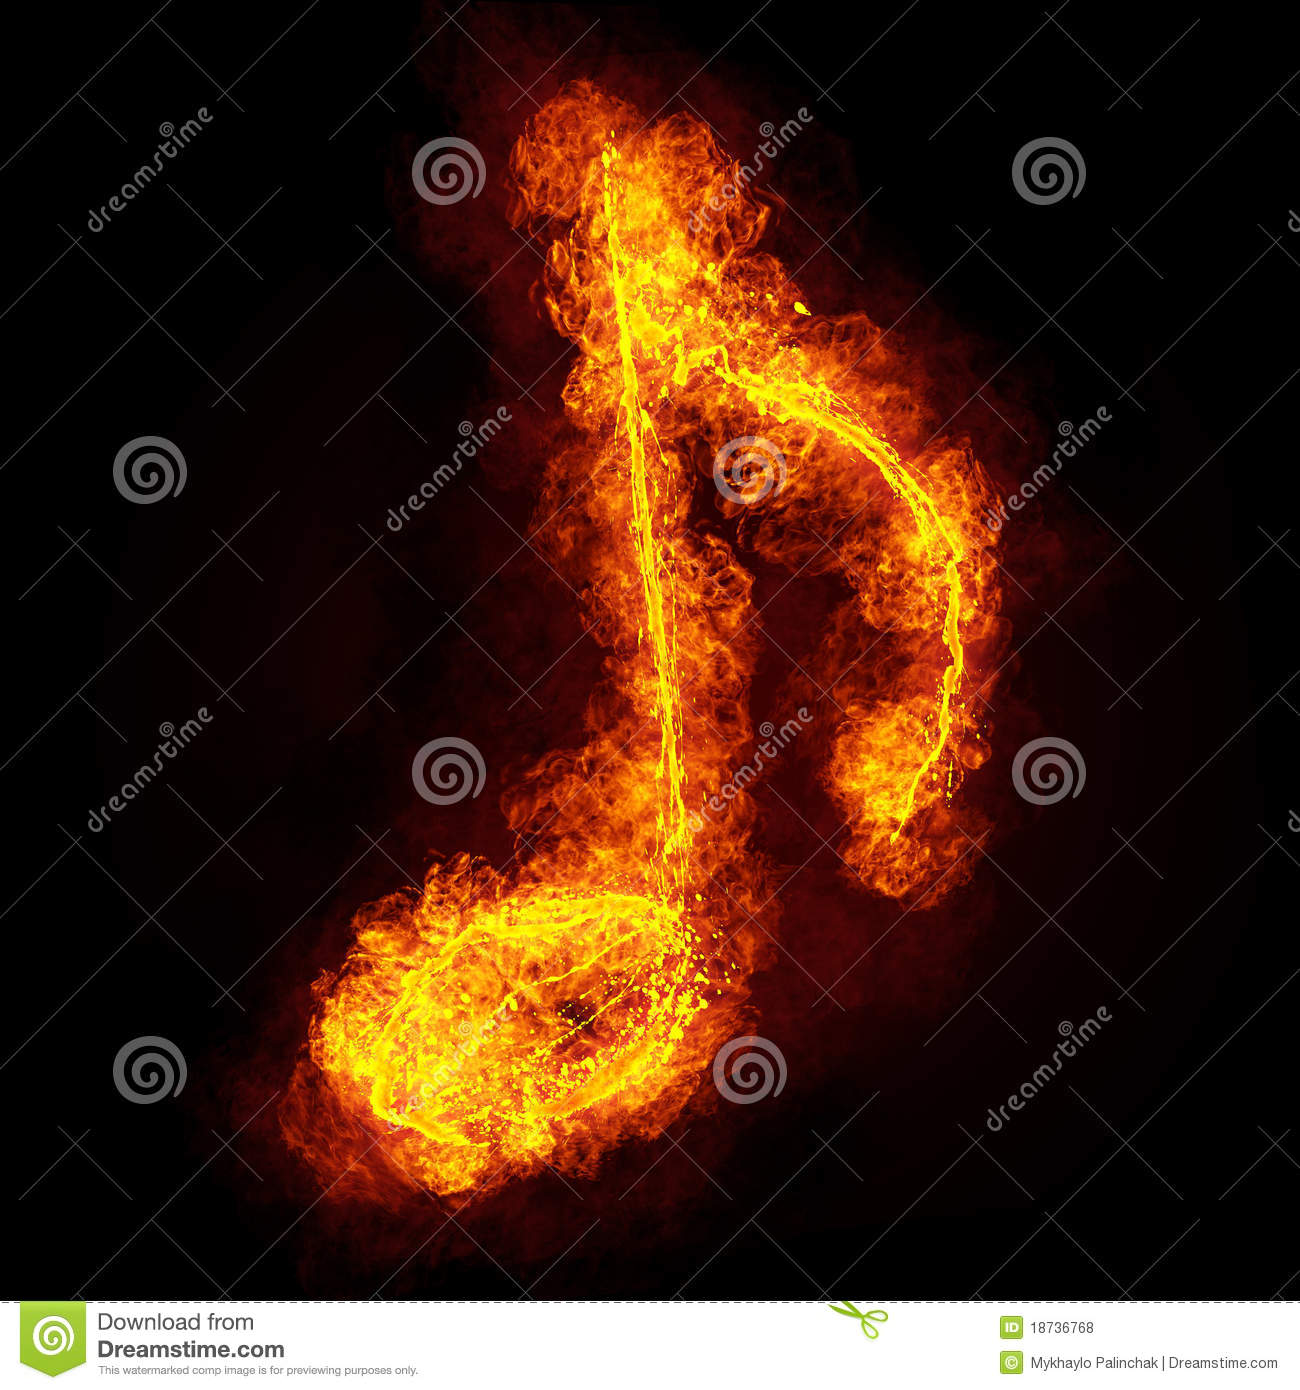 fiery-musical-note-symbol-18736768.jpg